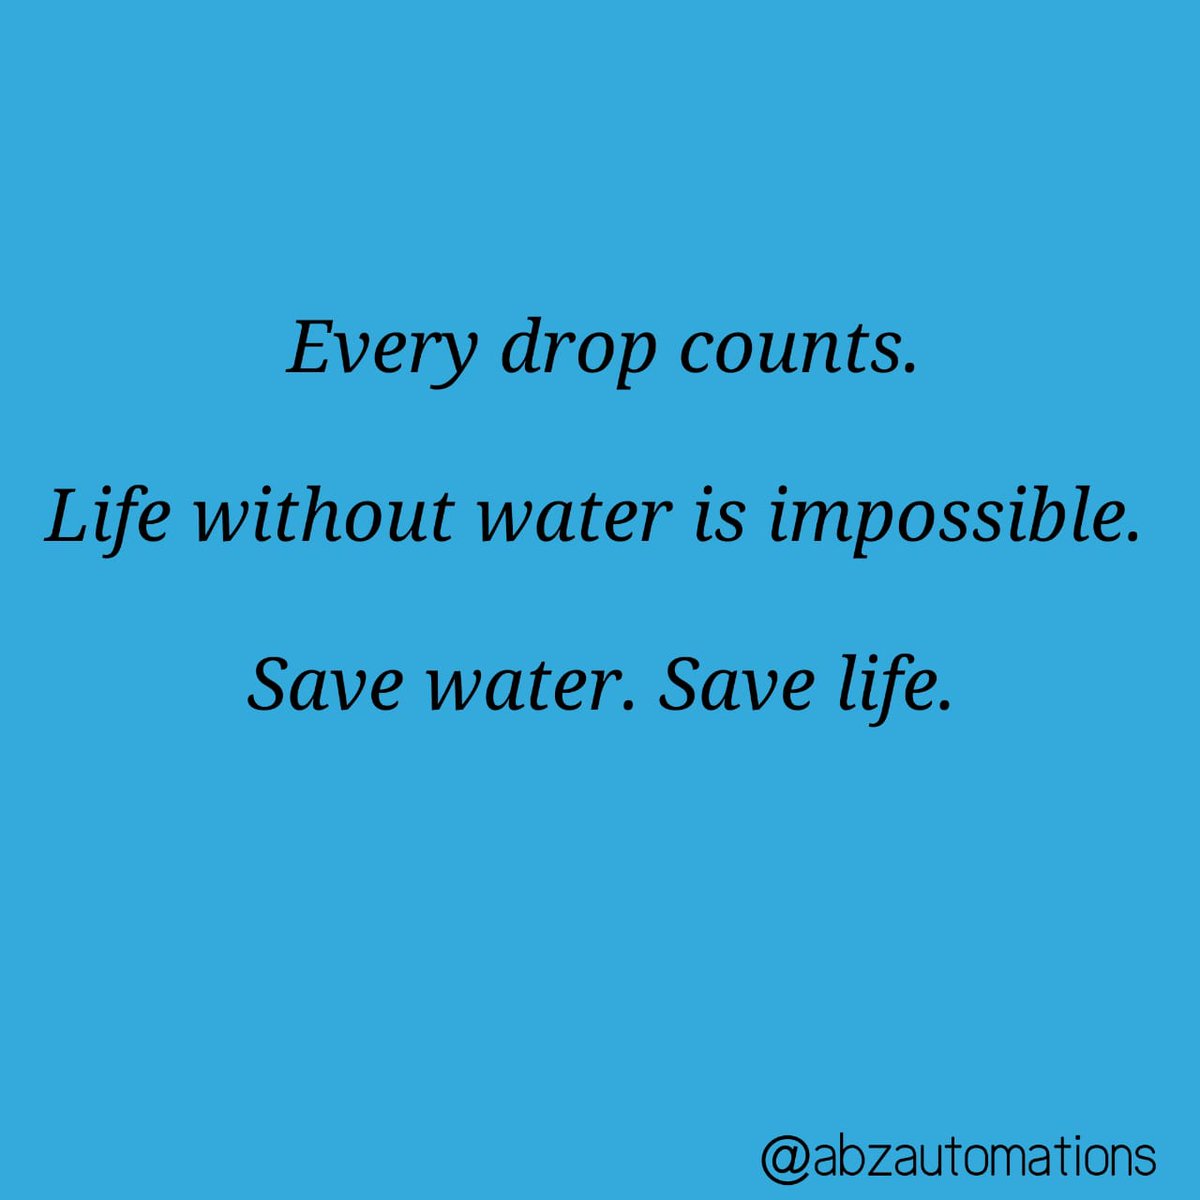 #AutoX #Savewater #Savemoney #Saveenergy #Saveelectricity #Savetime #Saveenvironment #AbzAutomations #Smartdevices #Kumasi #Smartsystems #Automation #Watersystem #Watertreatment #Water #Plumbing #Freshwater